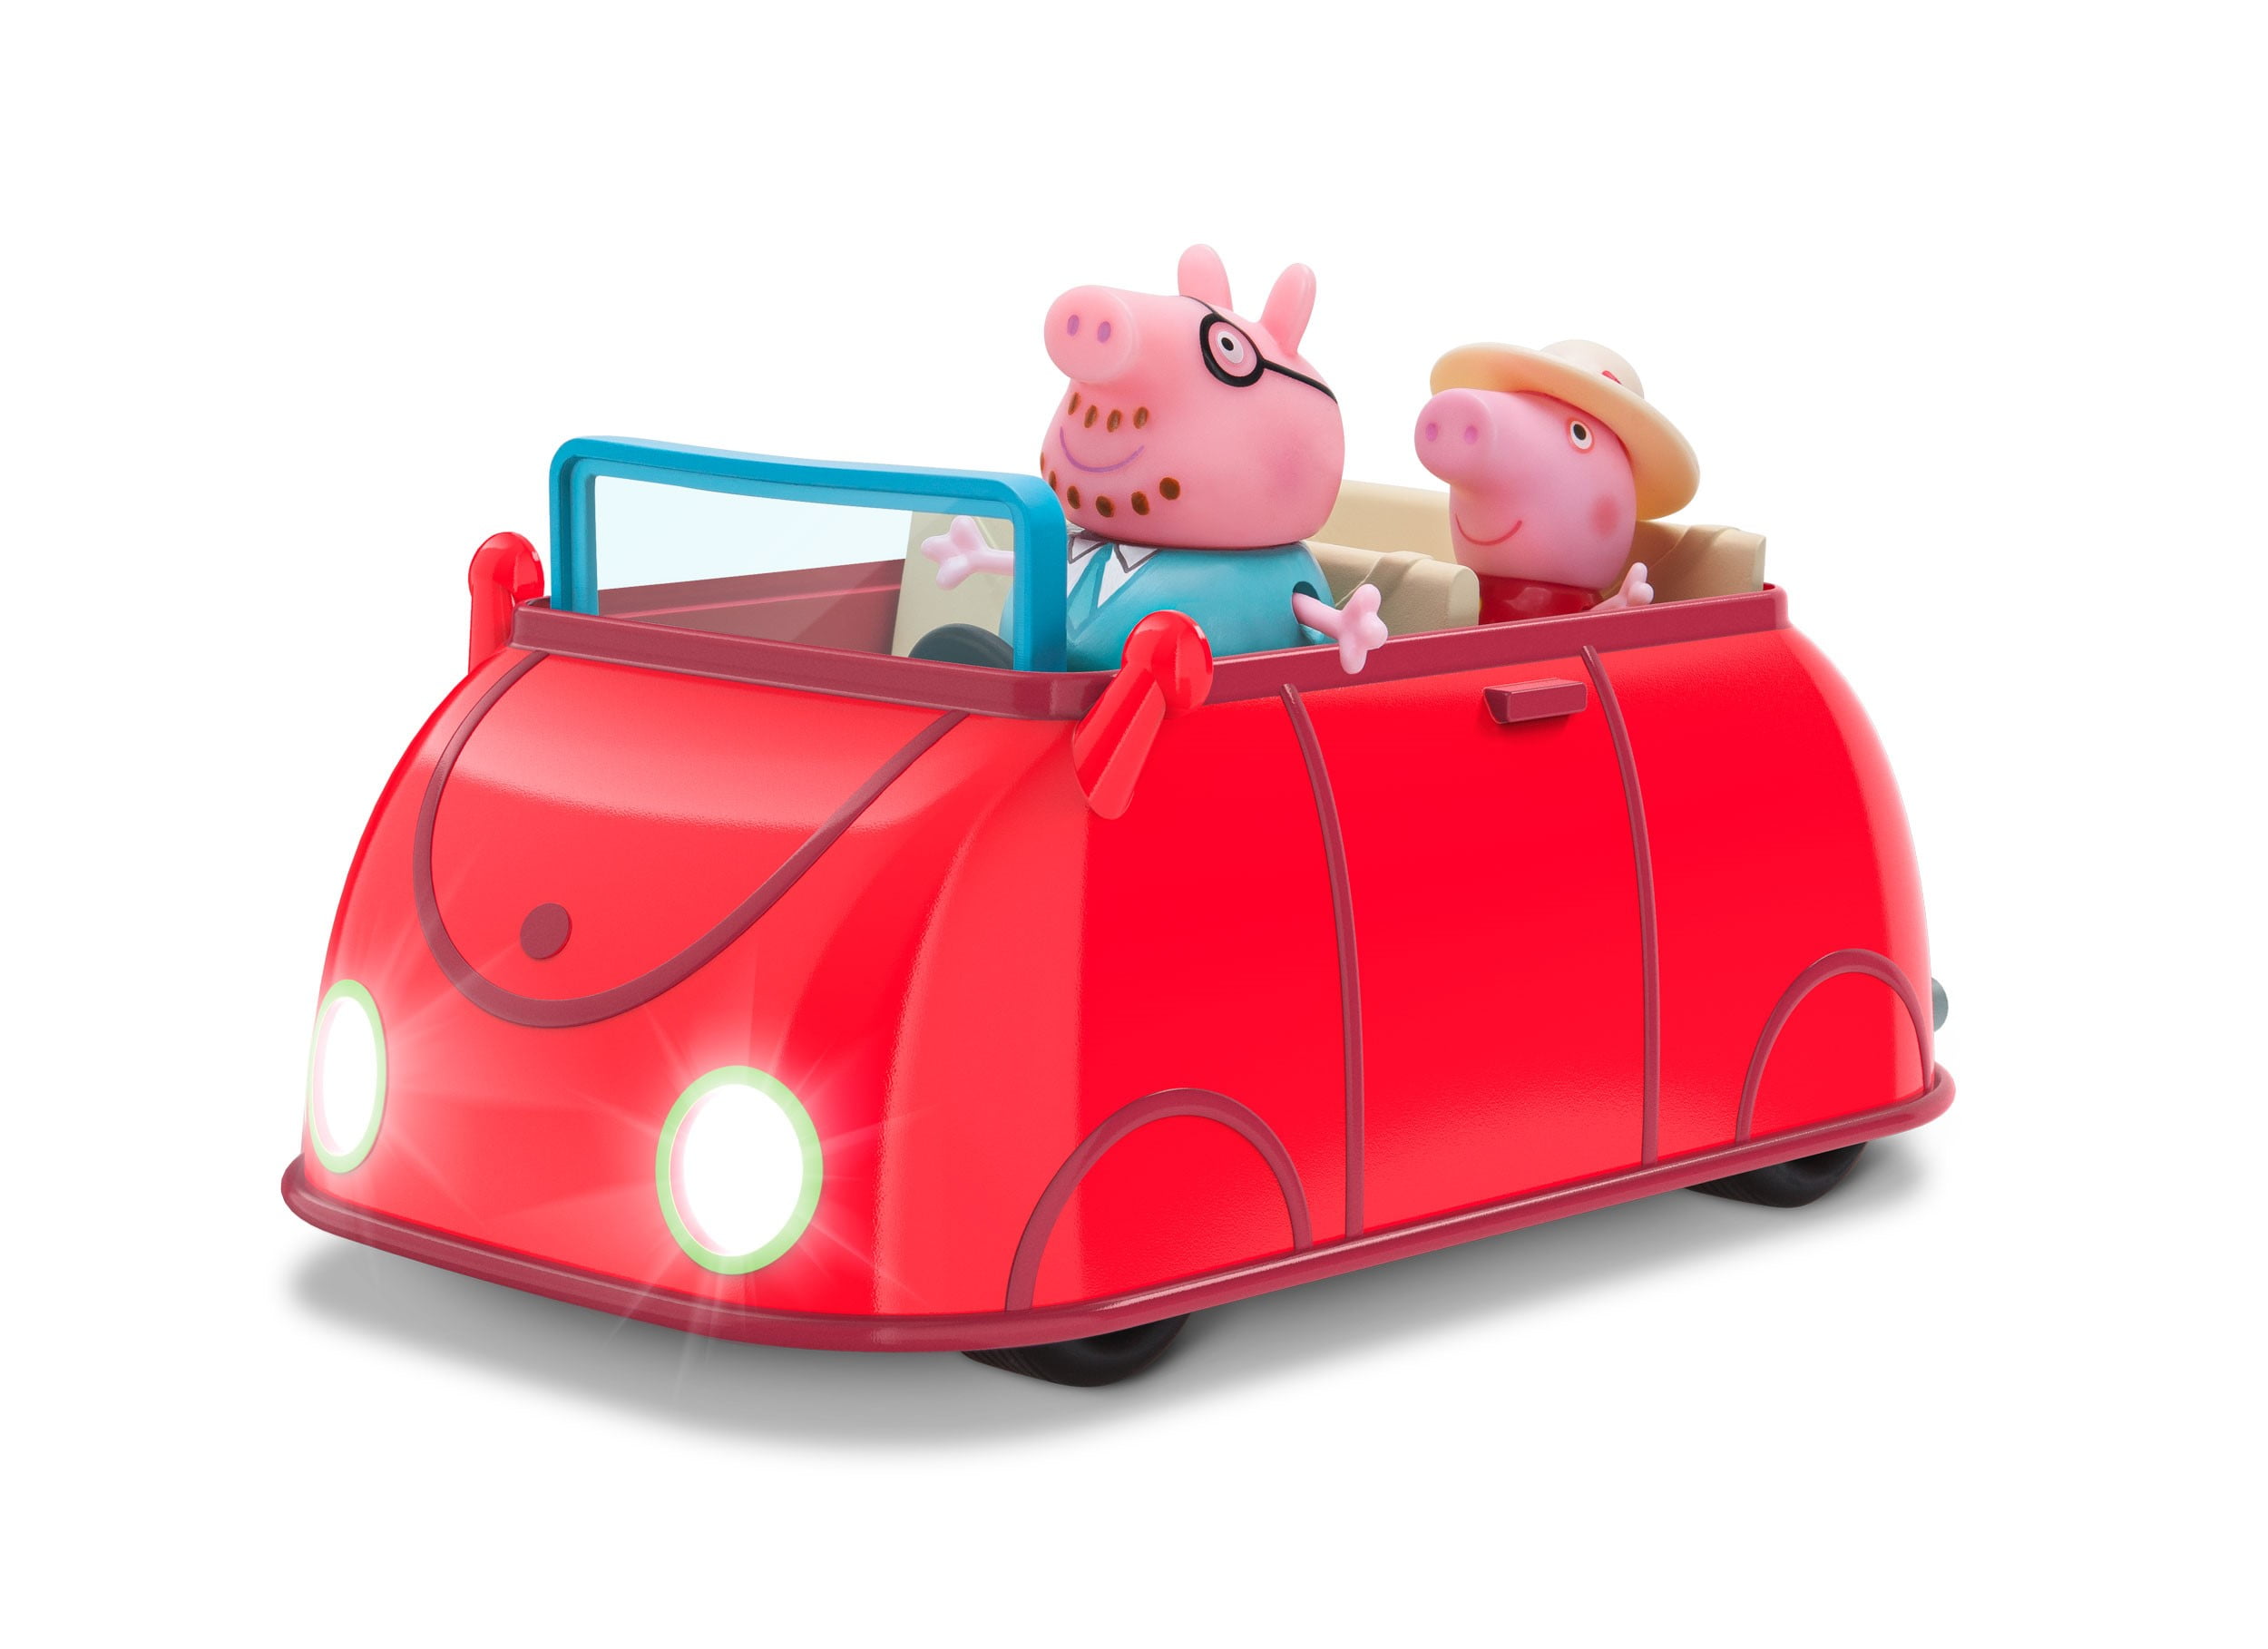 Peppa The Pig surprise Blind Box Bag Car Surprise Suzy sheep toy figure camper 